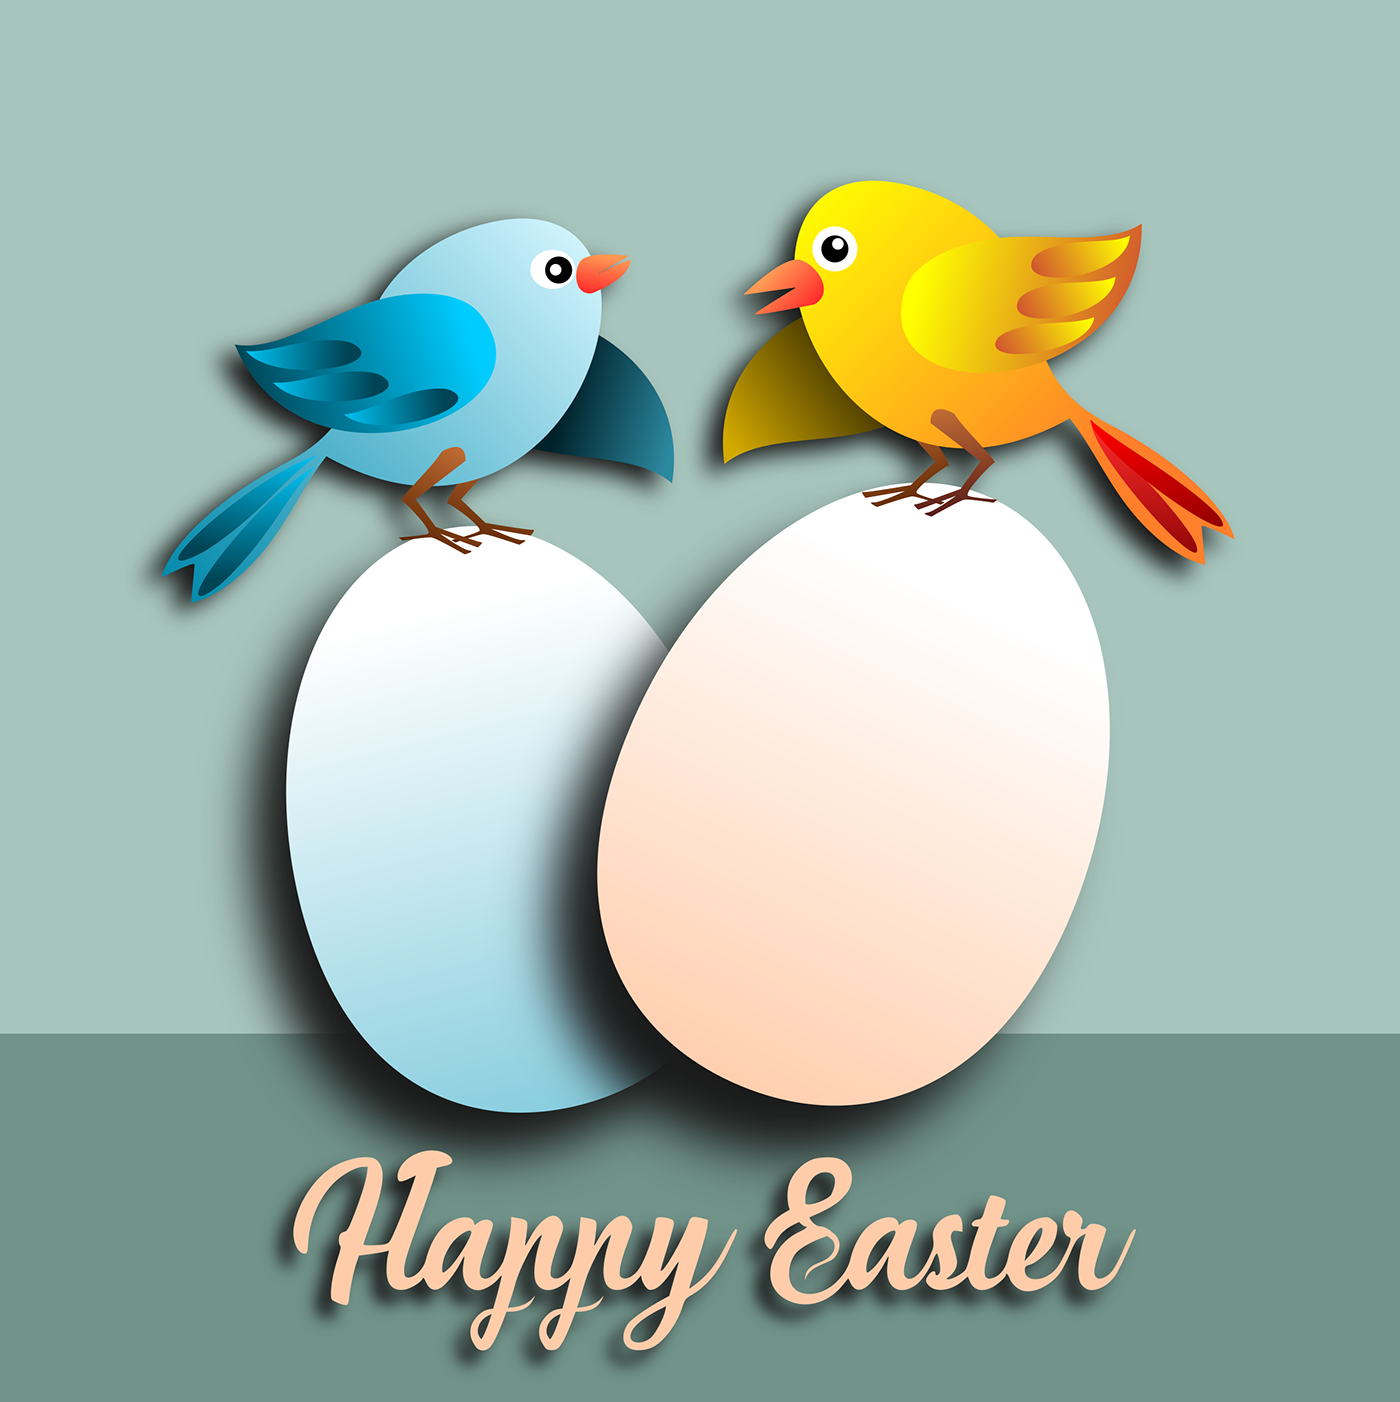 Easter happy cards birds eggs animals festivity Holiday